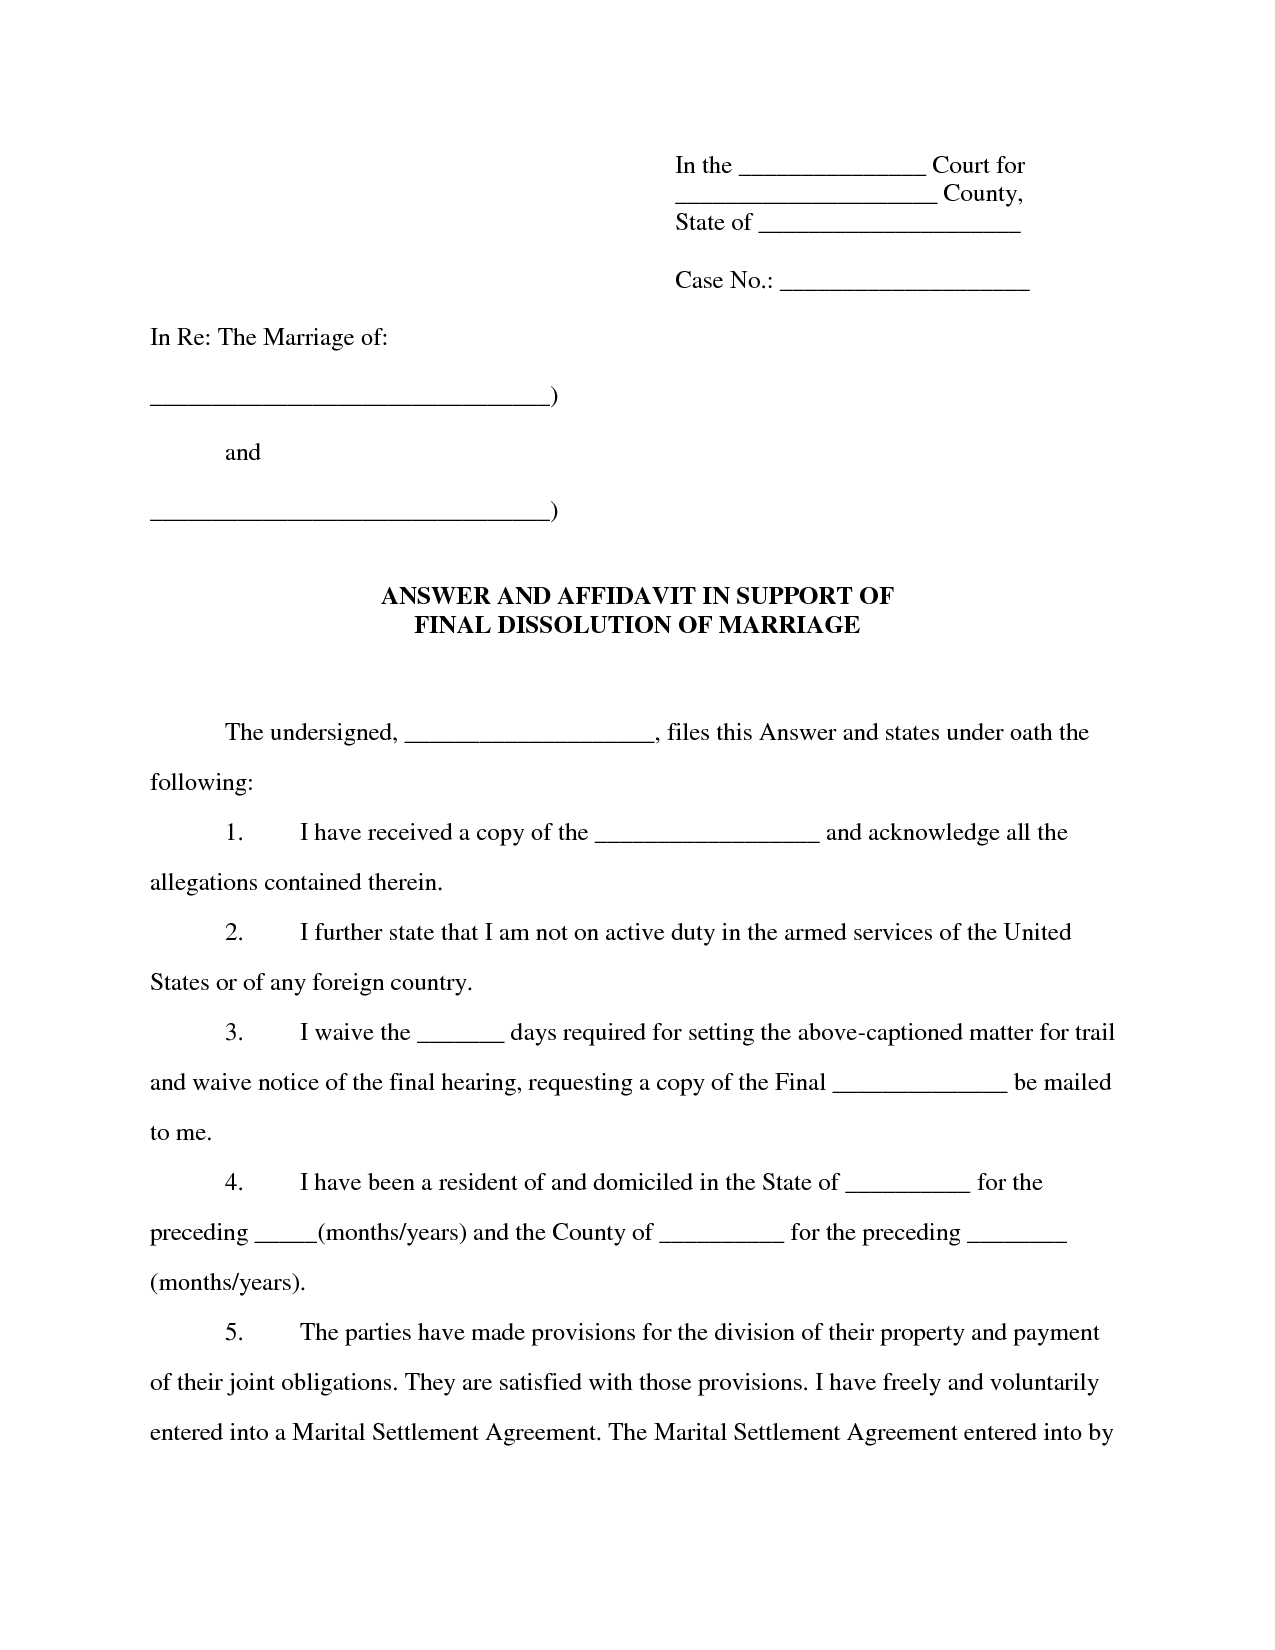 Marriage Affidavit Template Free Printable Documents 1517